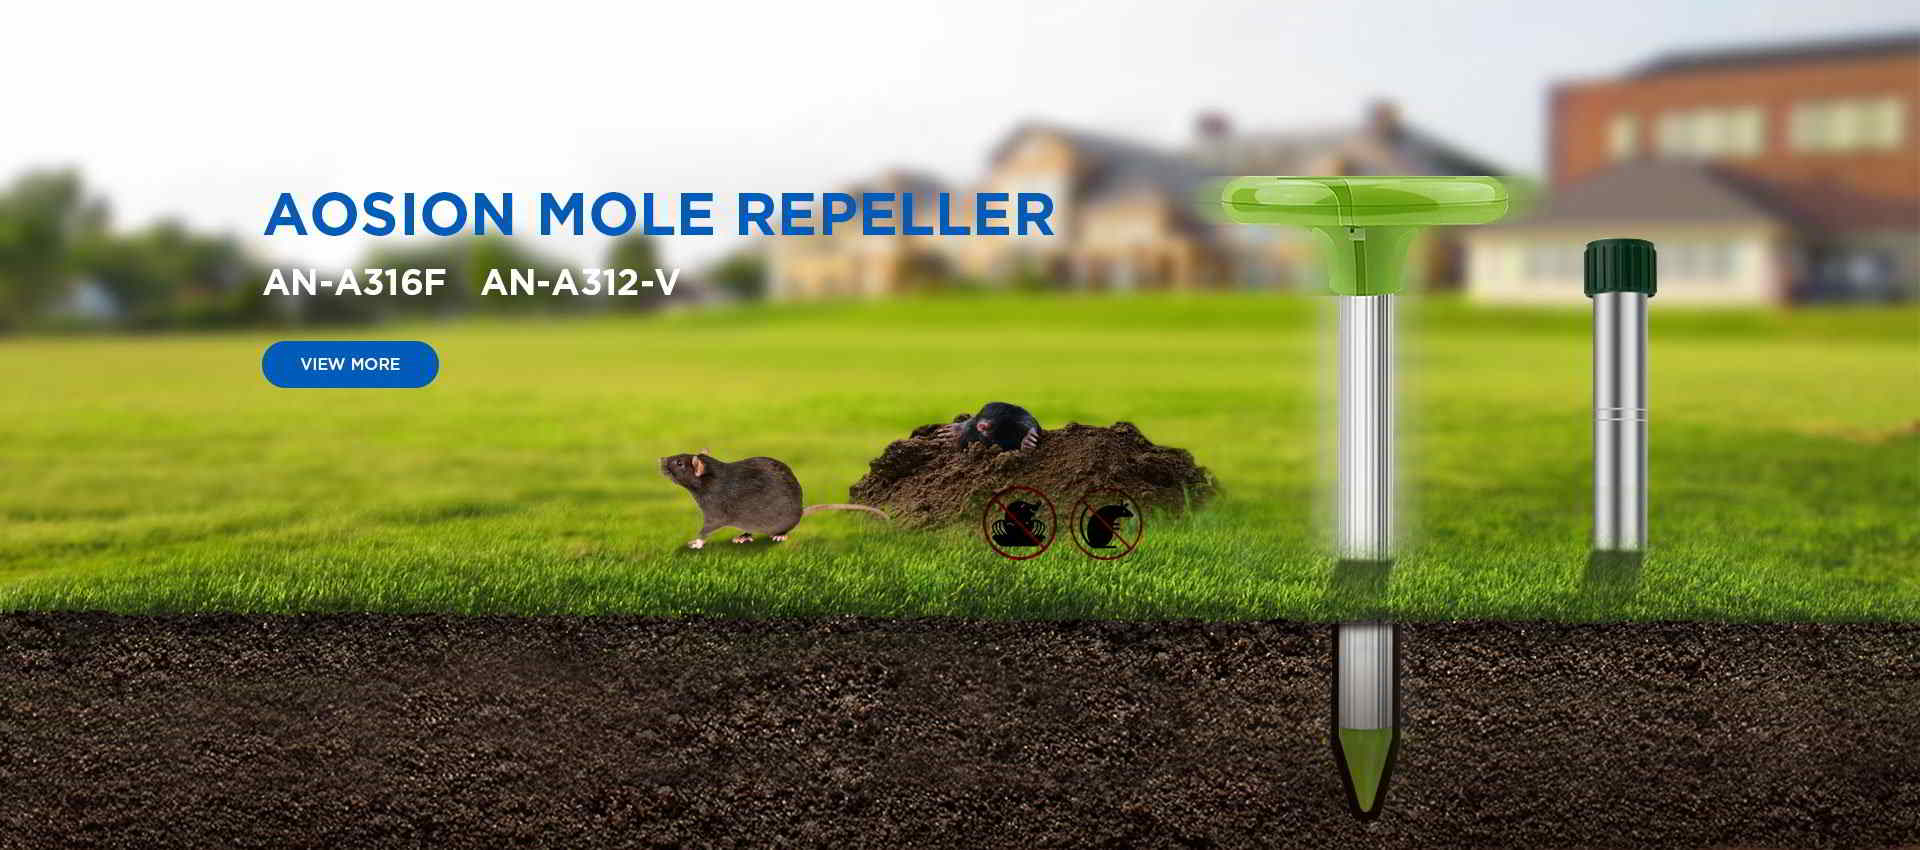 AOSION Mole Repeller